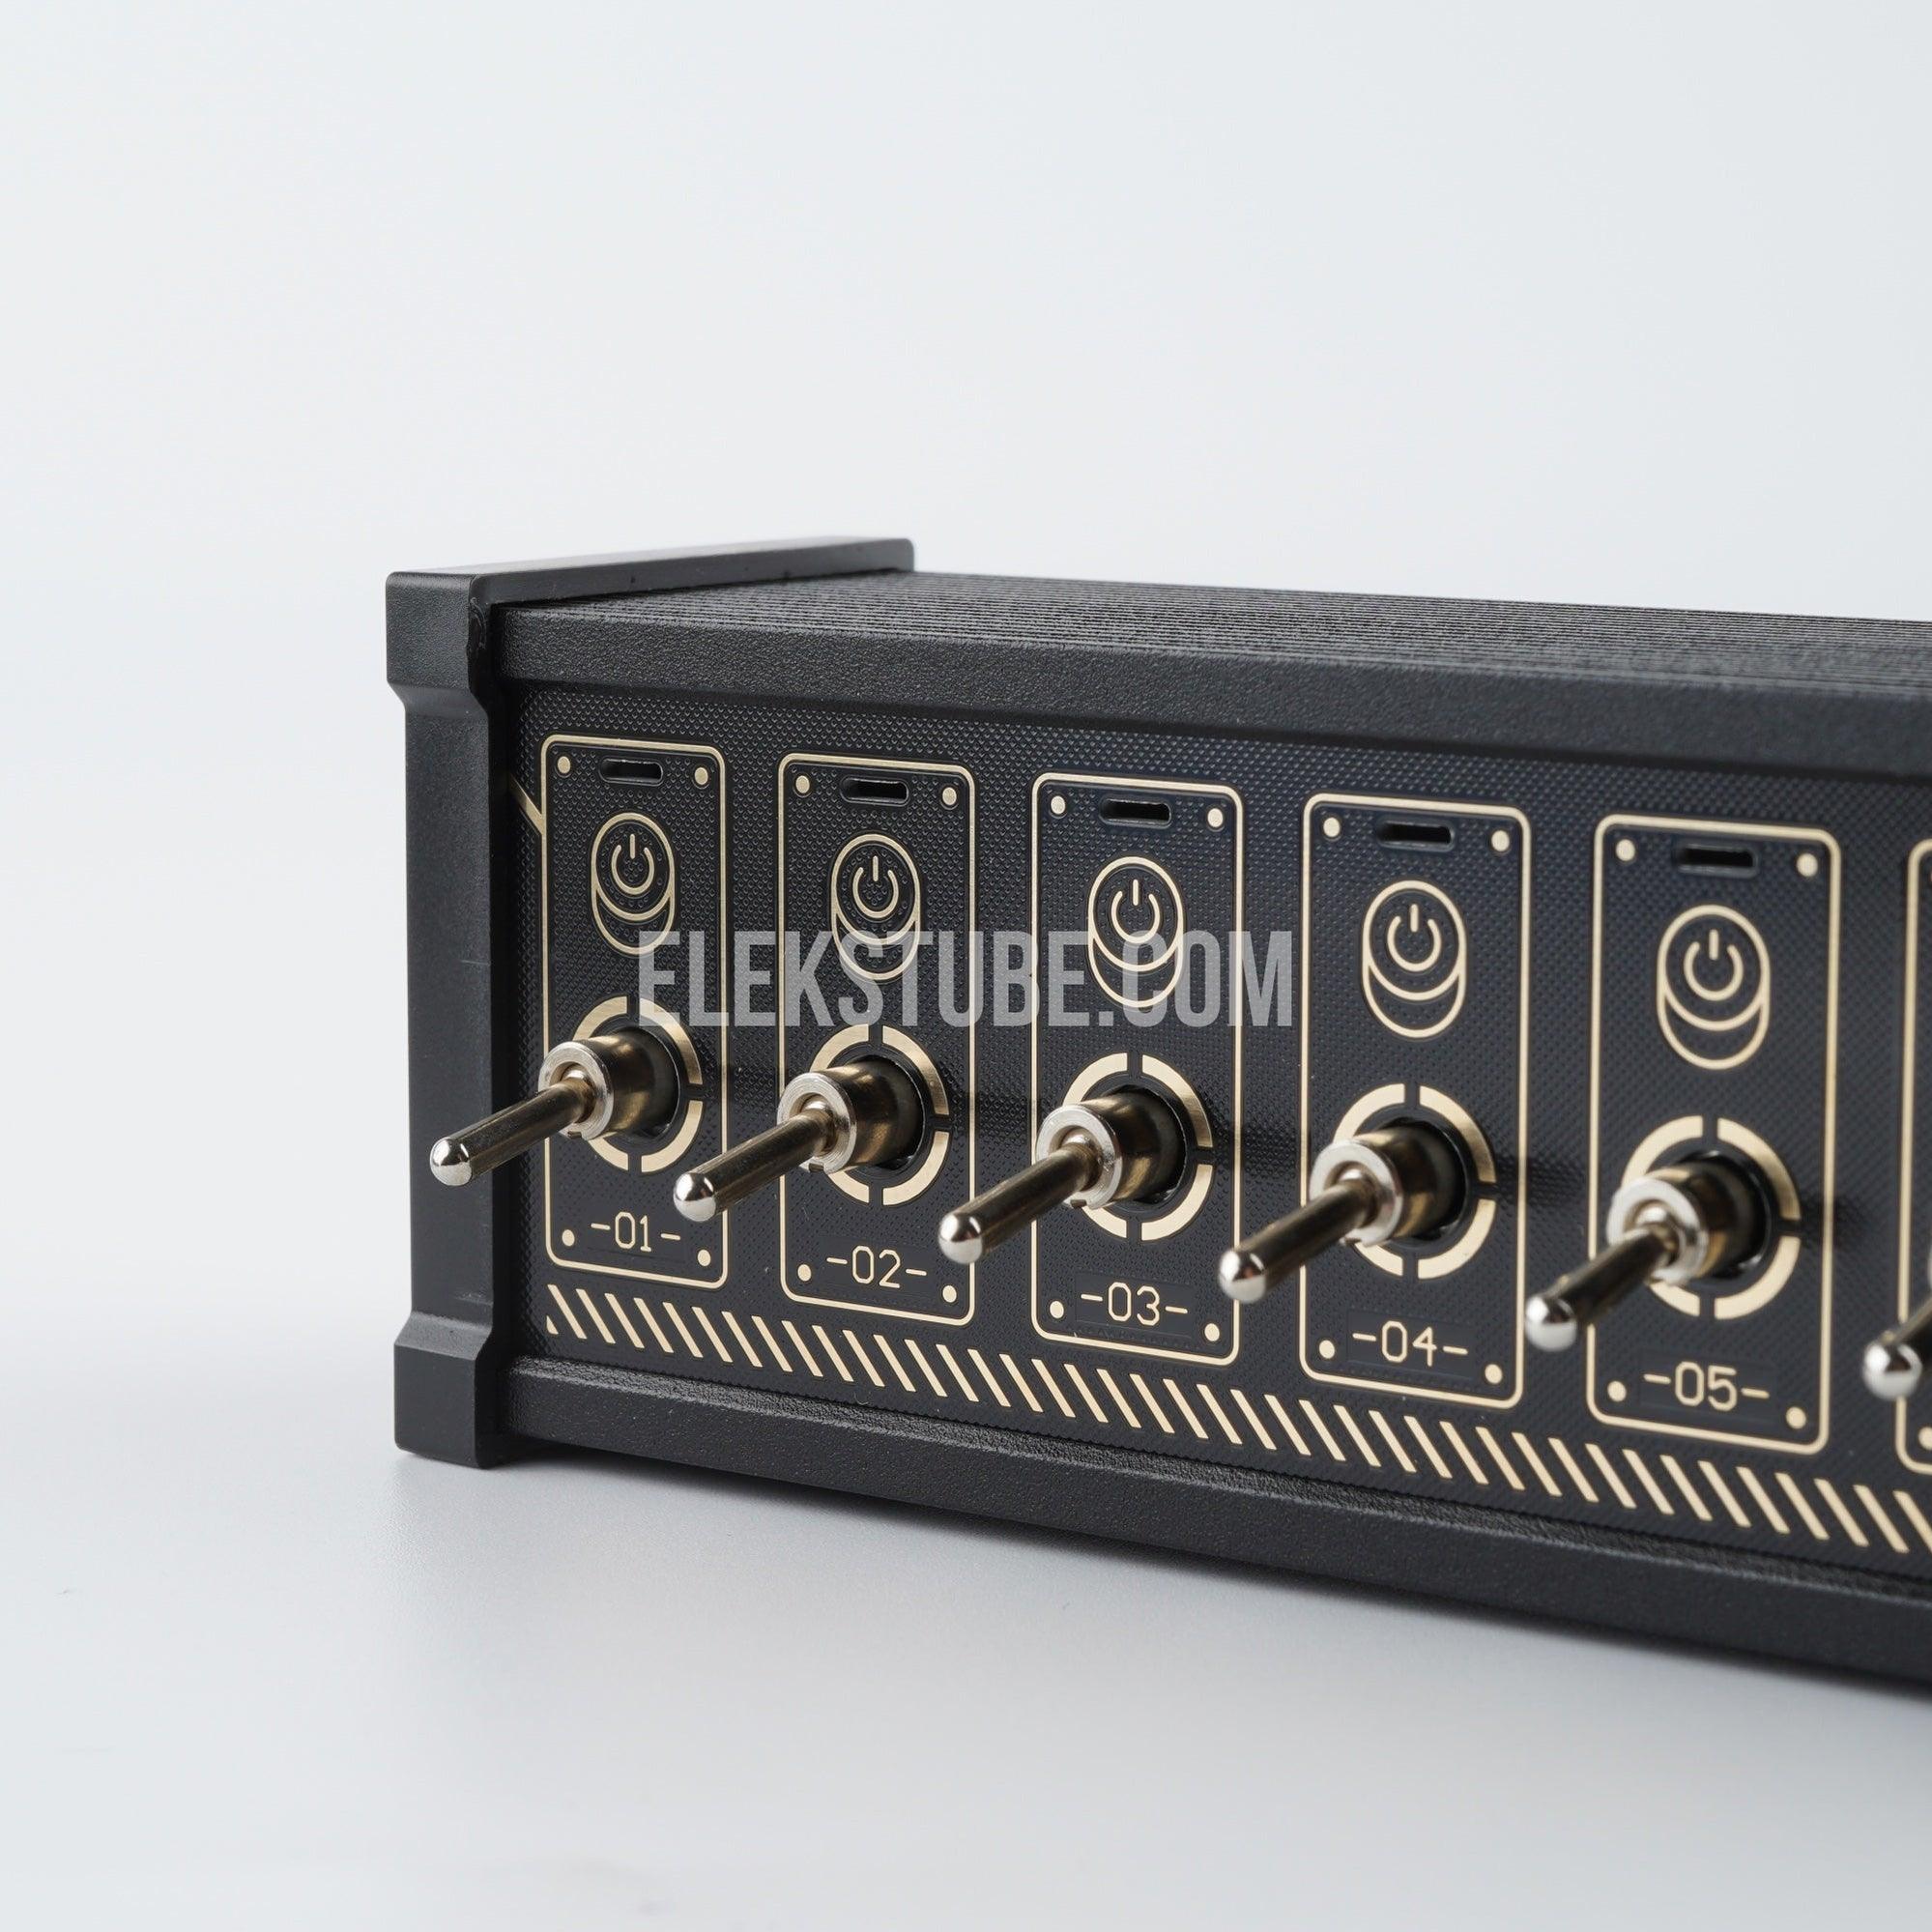 EleksMaker USB Switch | Blocky USB Hub NK5 - EleksTube IPS Global - EleksMaker